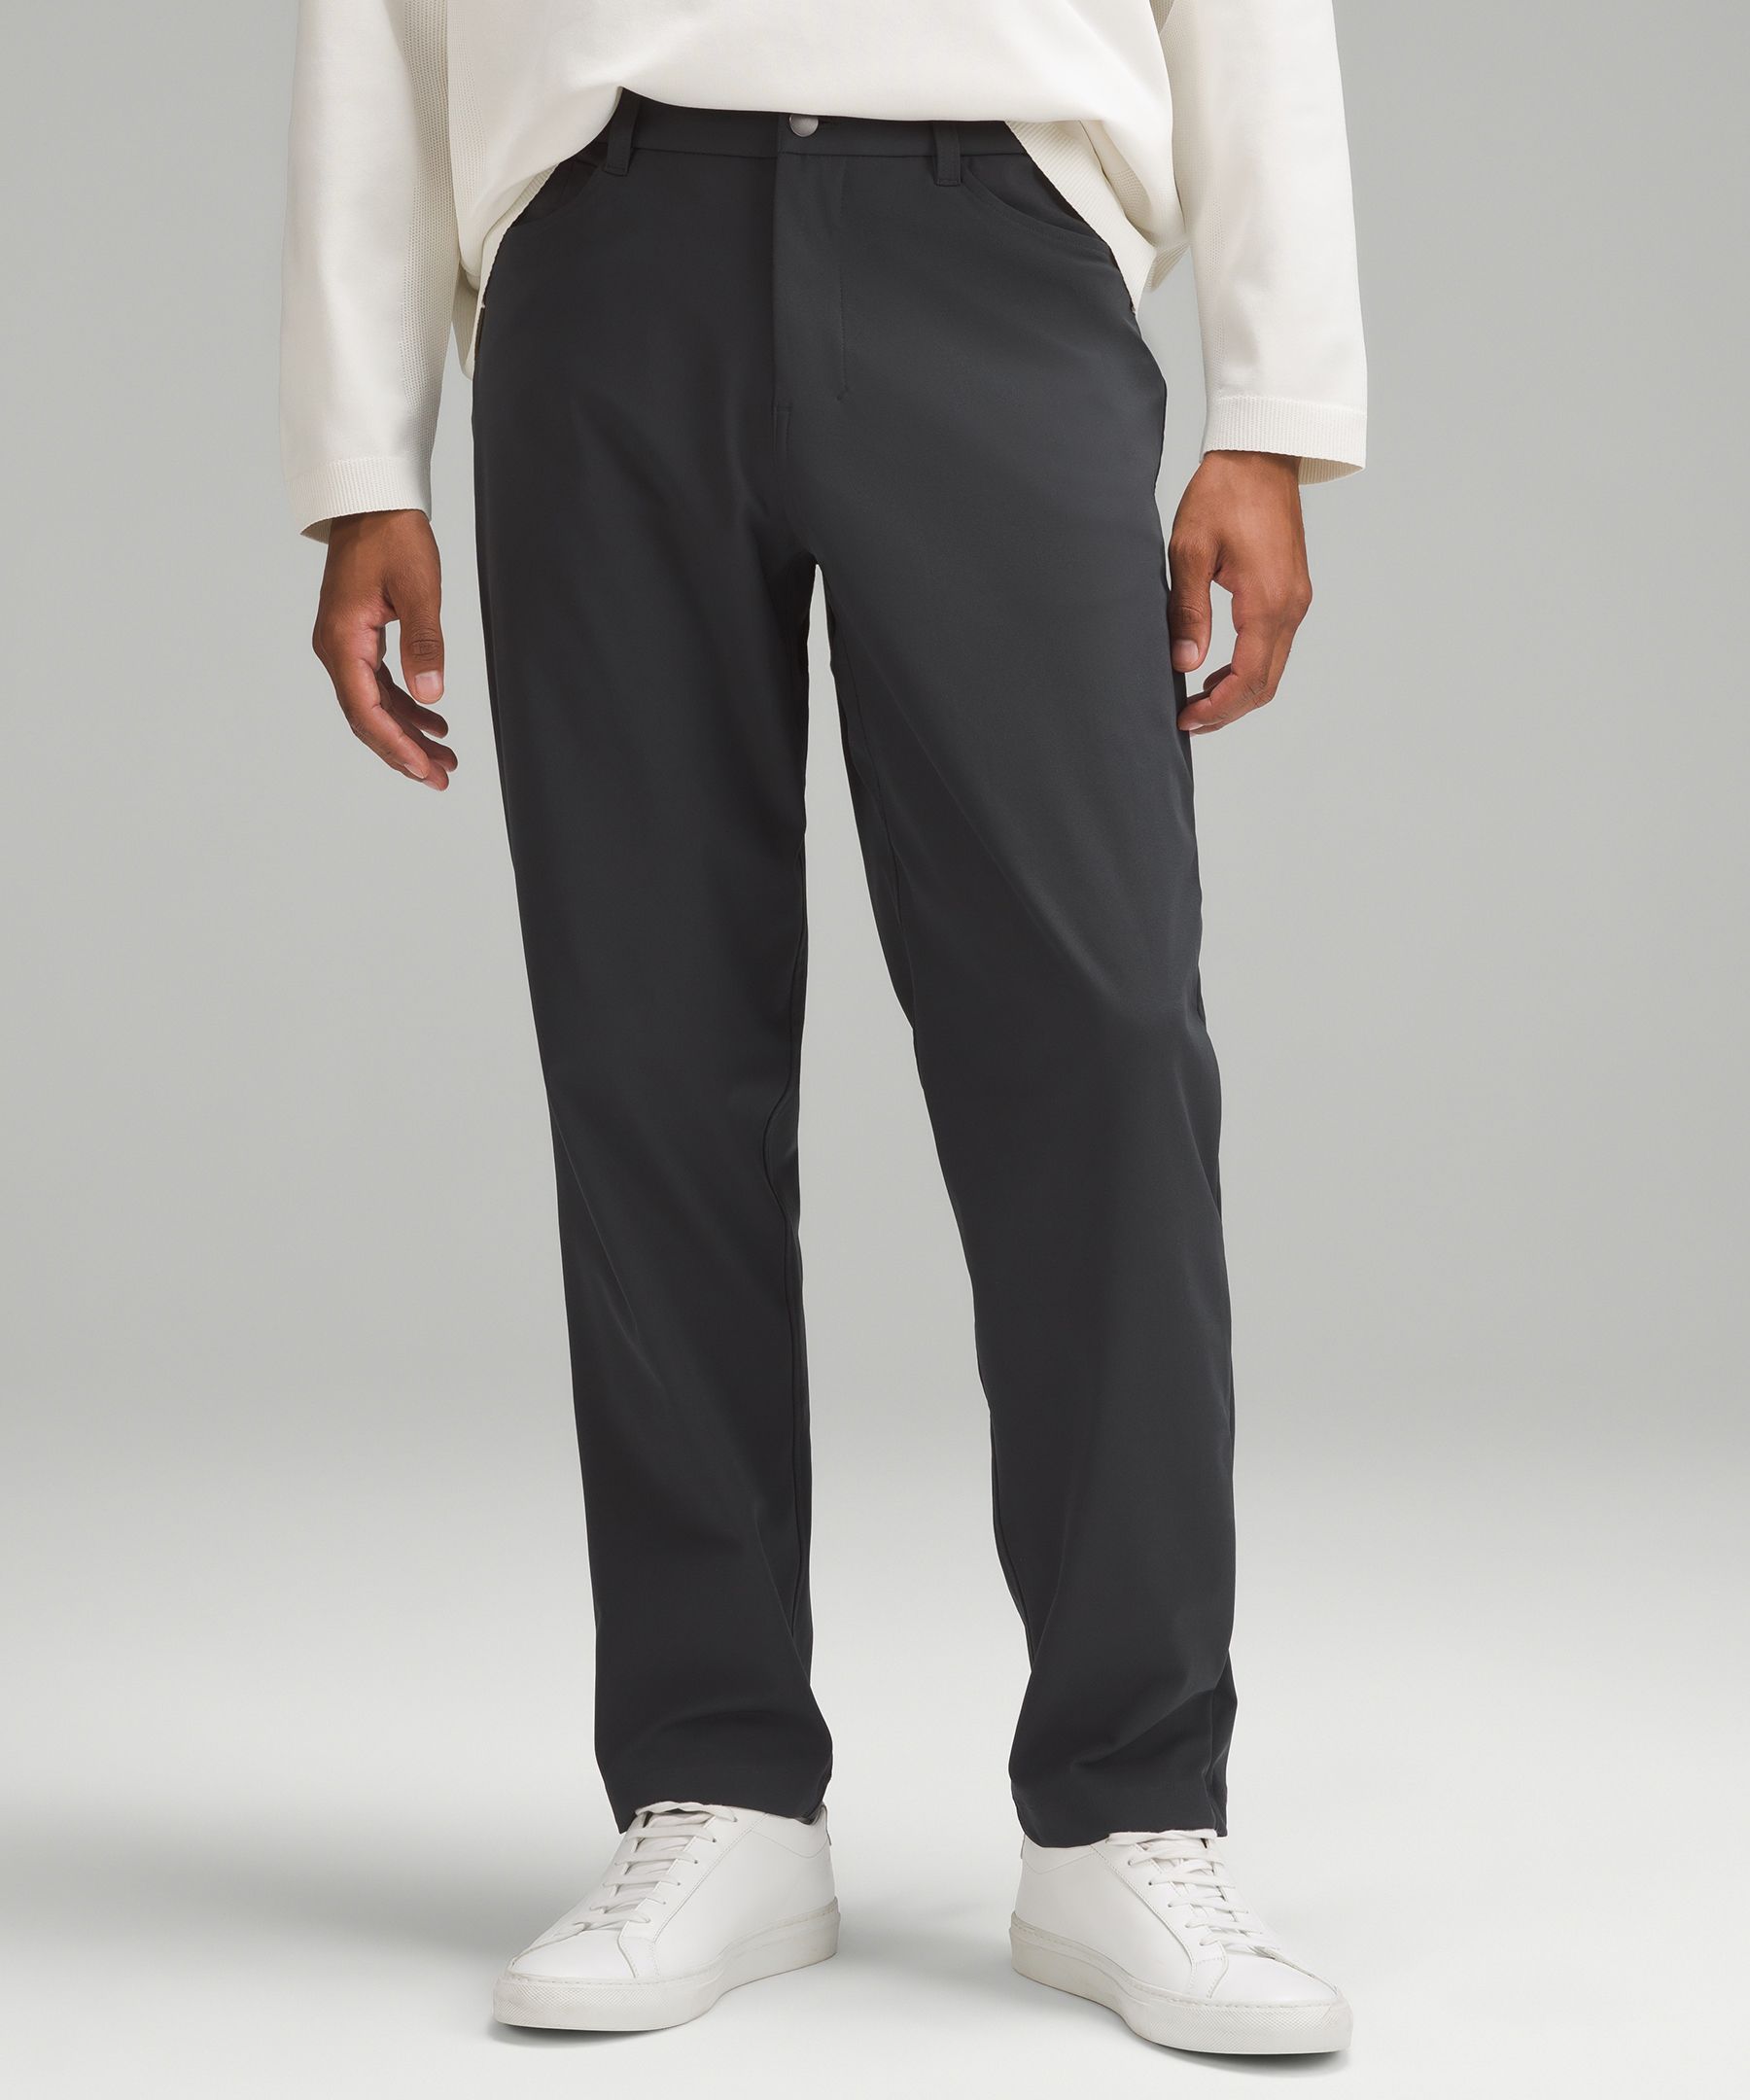 LULULEMON ABC Dress Pants Men's 36 x 28 Inseam Black - Wear to